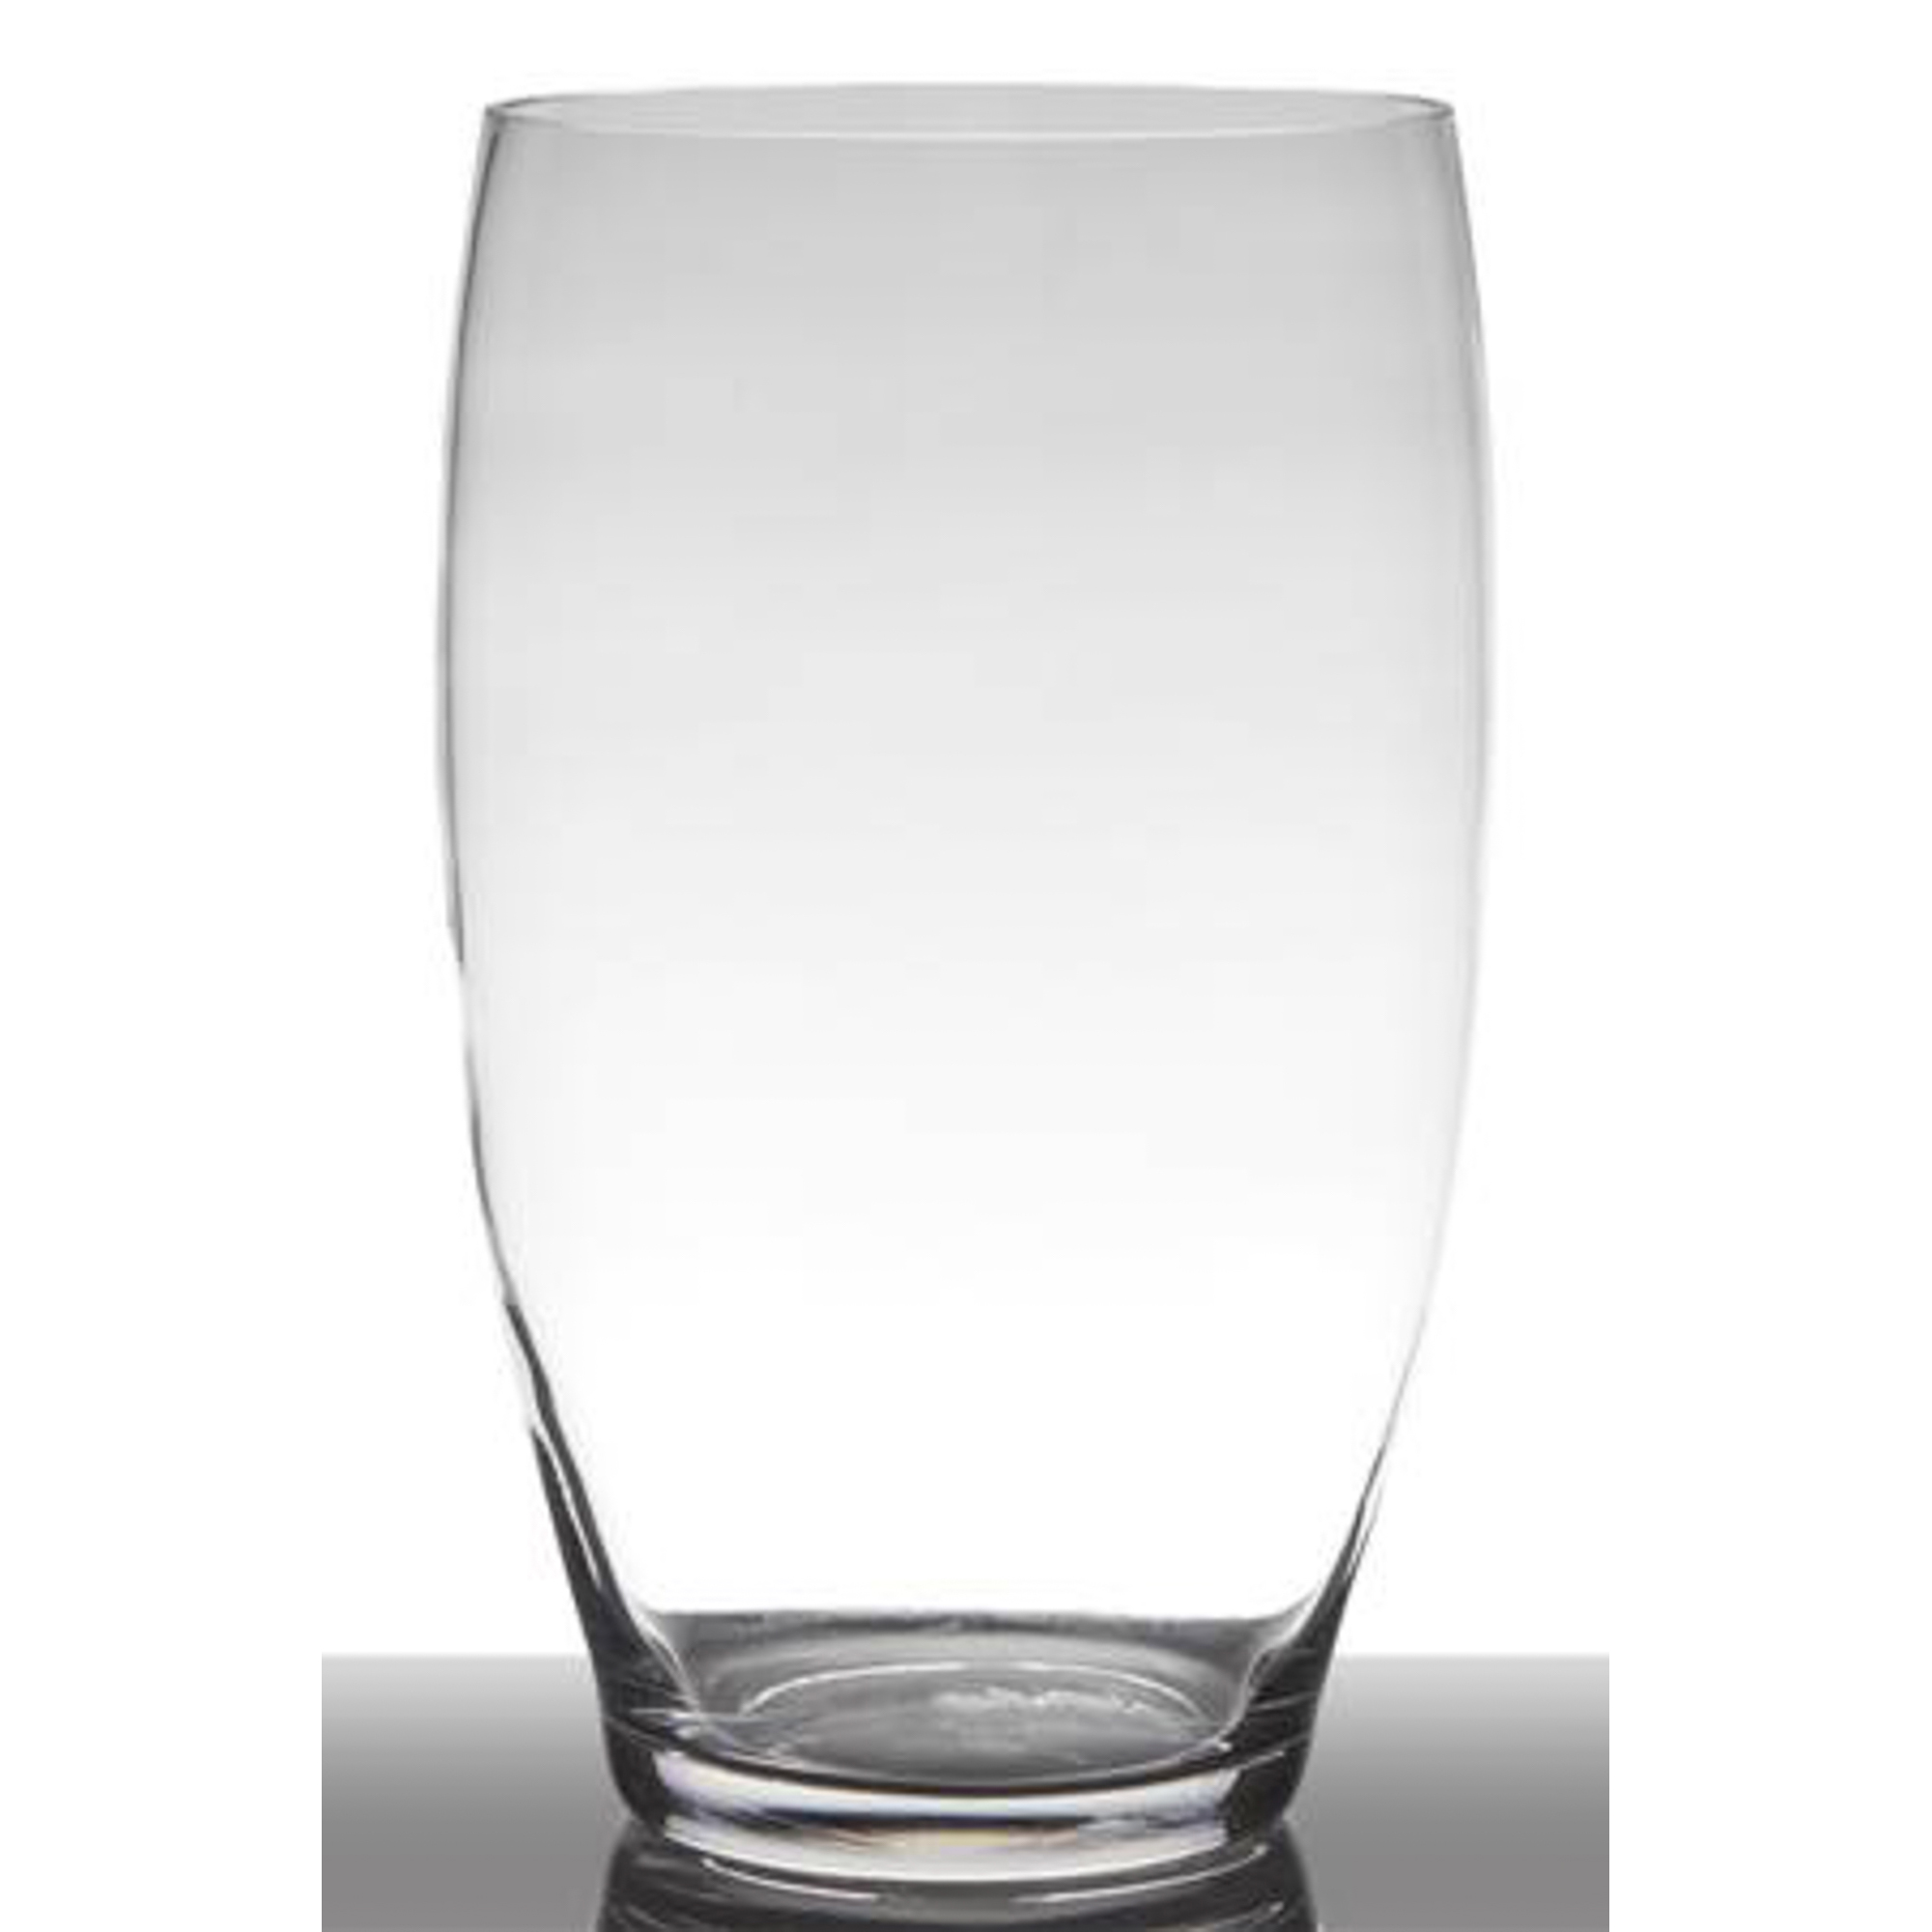 Ваза Hackbijl glass naomi 8338